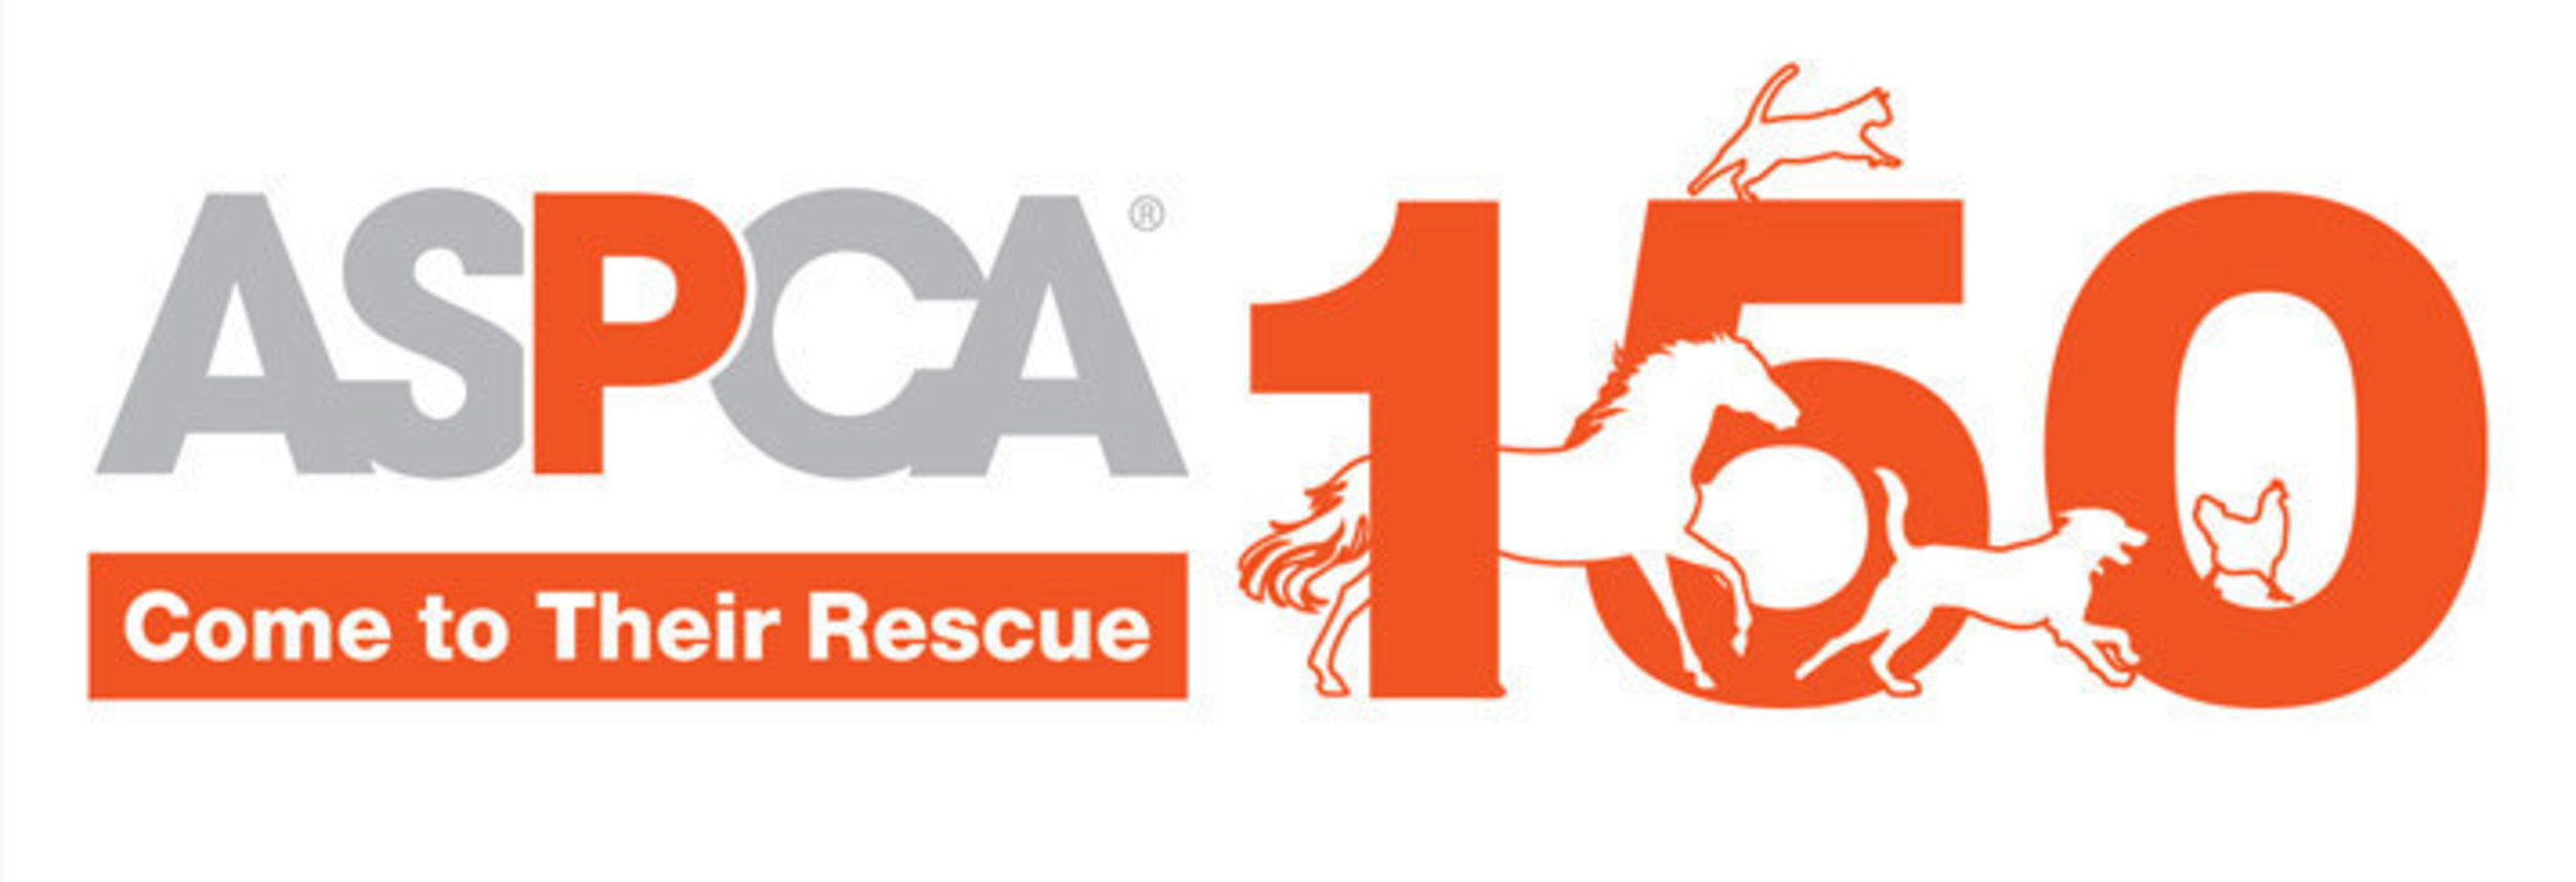 The ASPCA celebrates 150 years (PRNewsFoto/ASPCA)